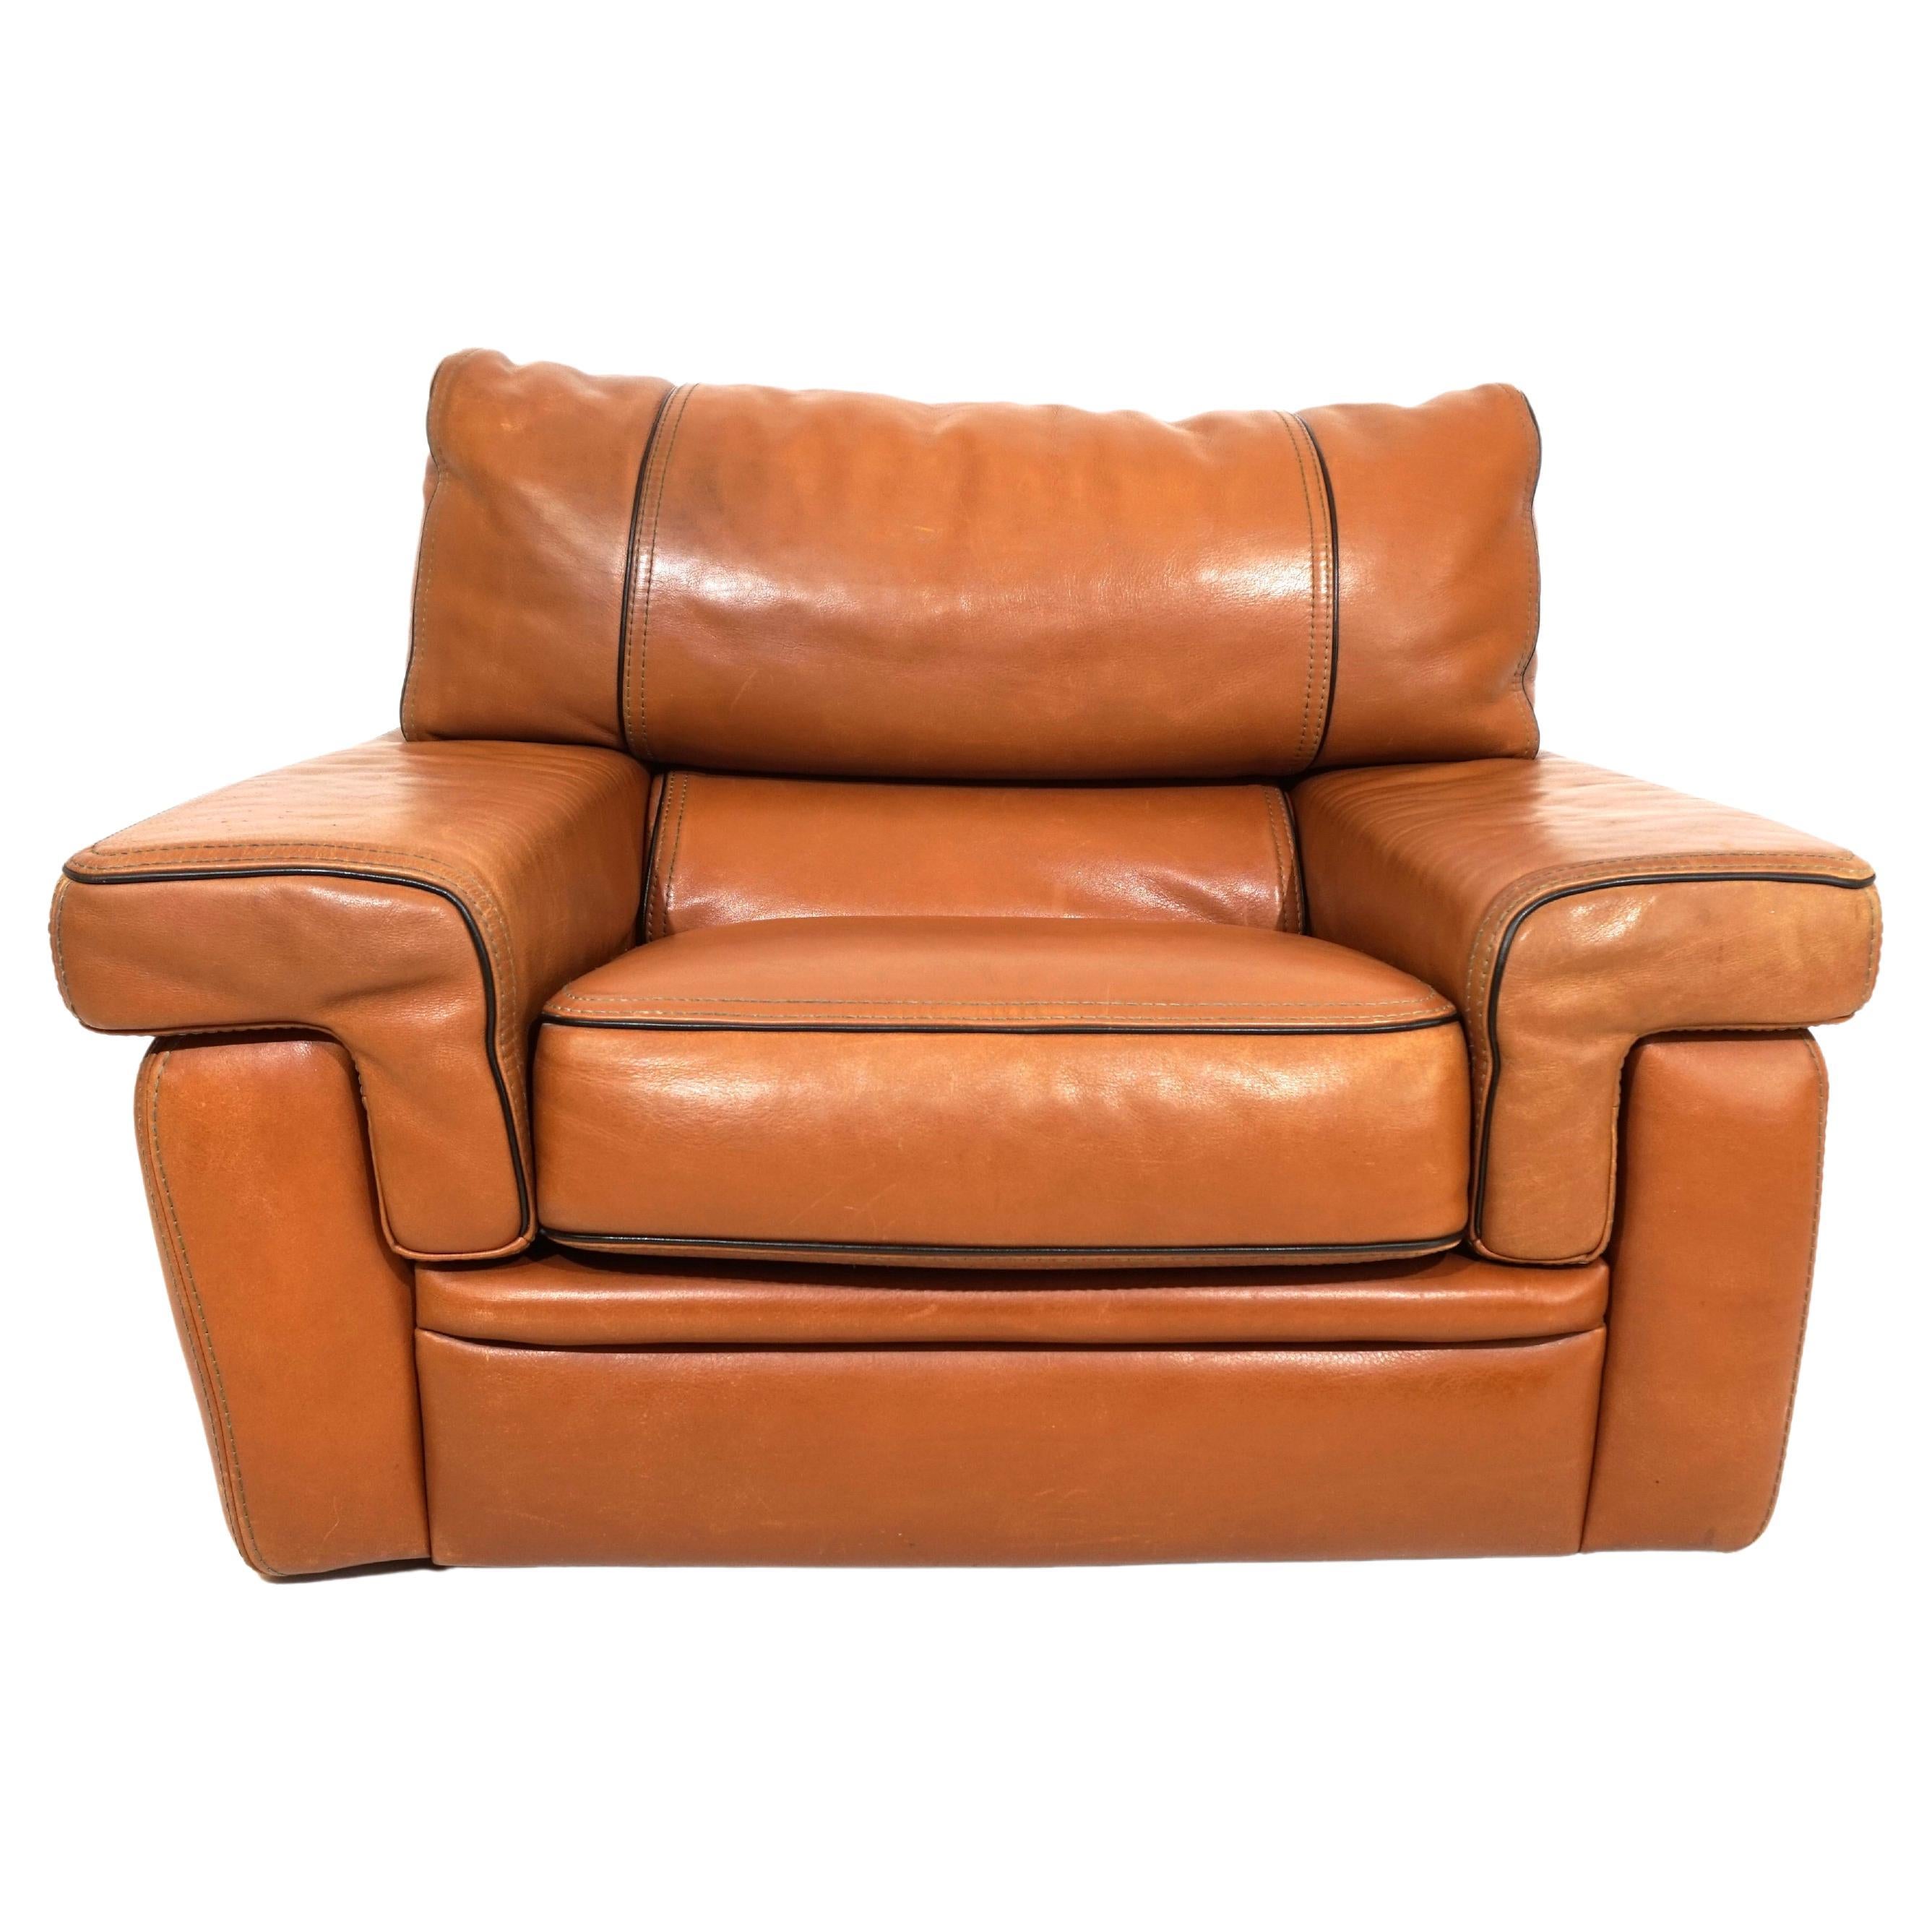 Roche Bobois leather armchair 70s